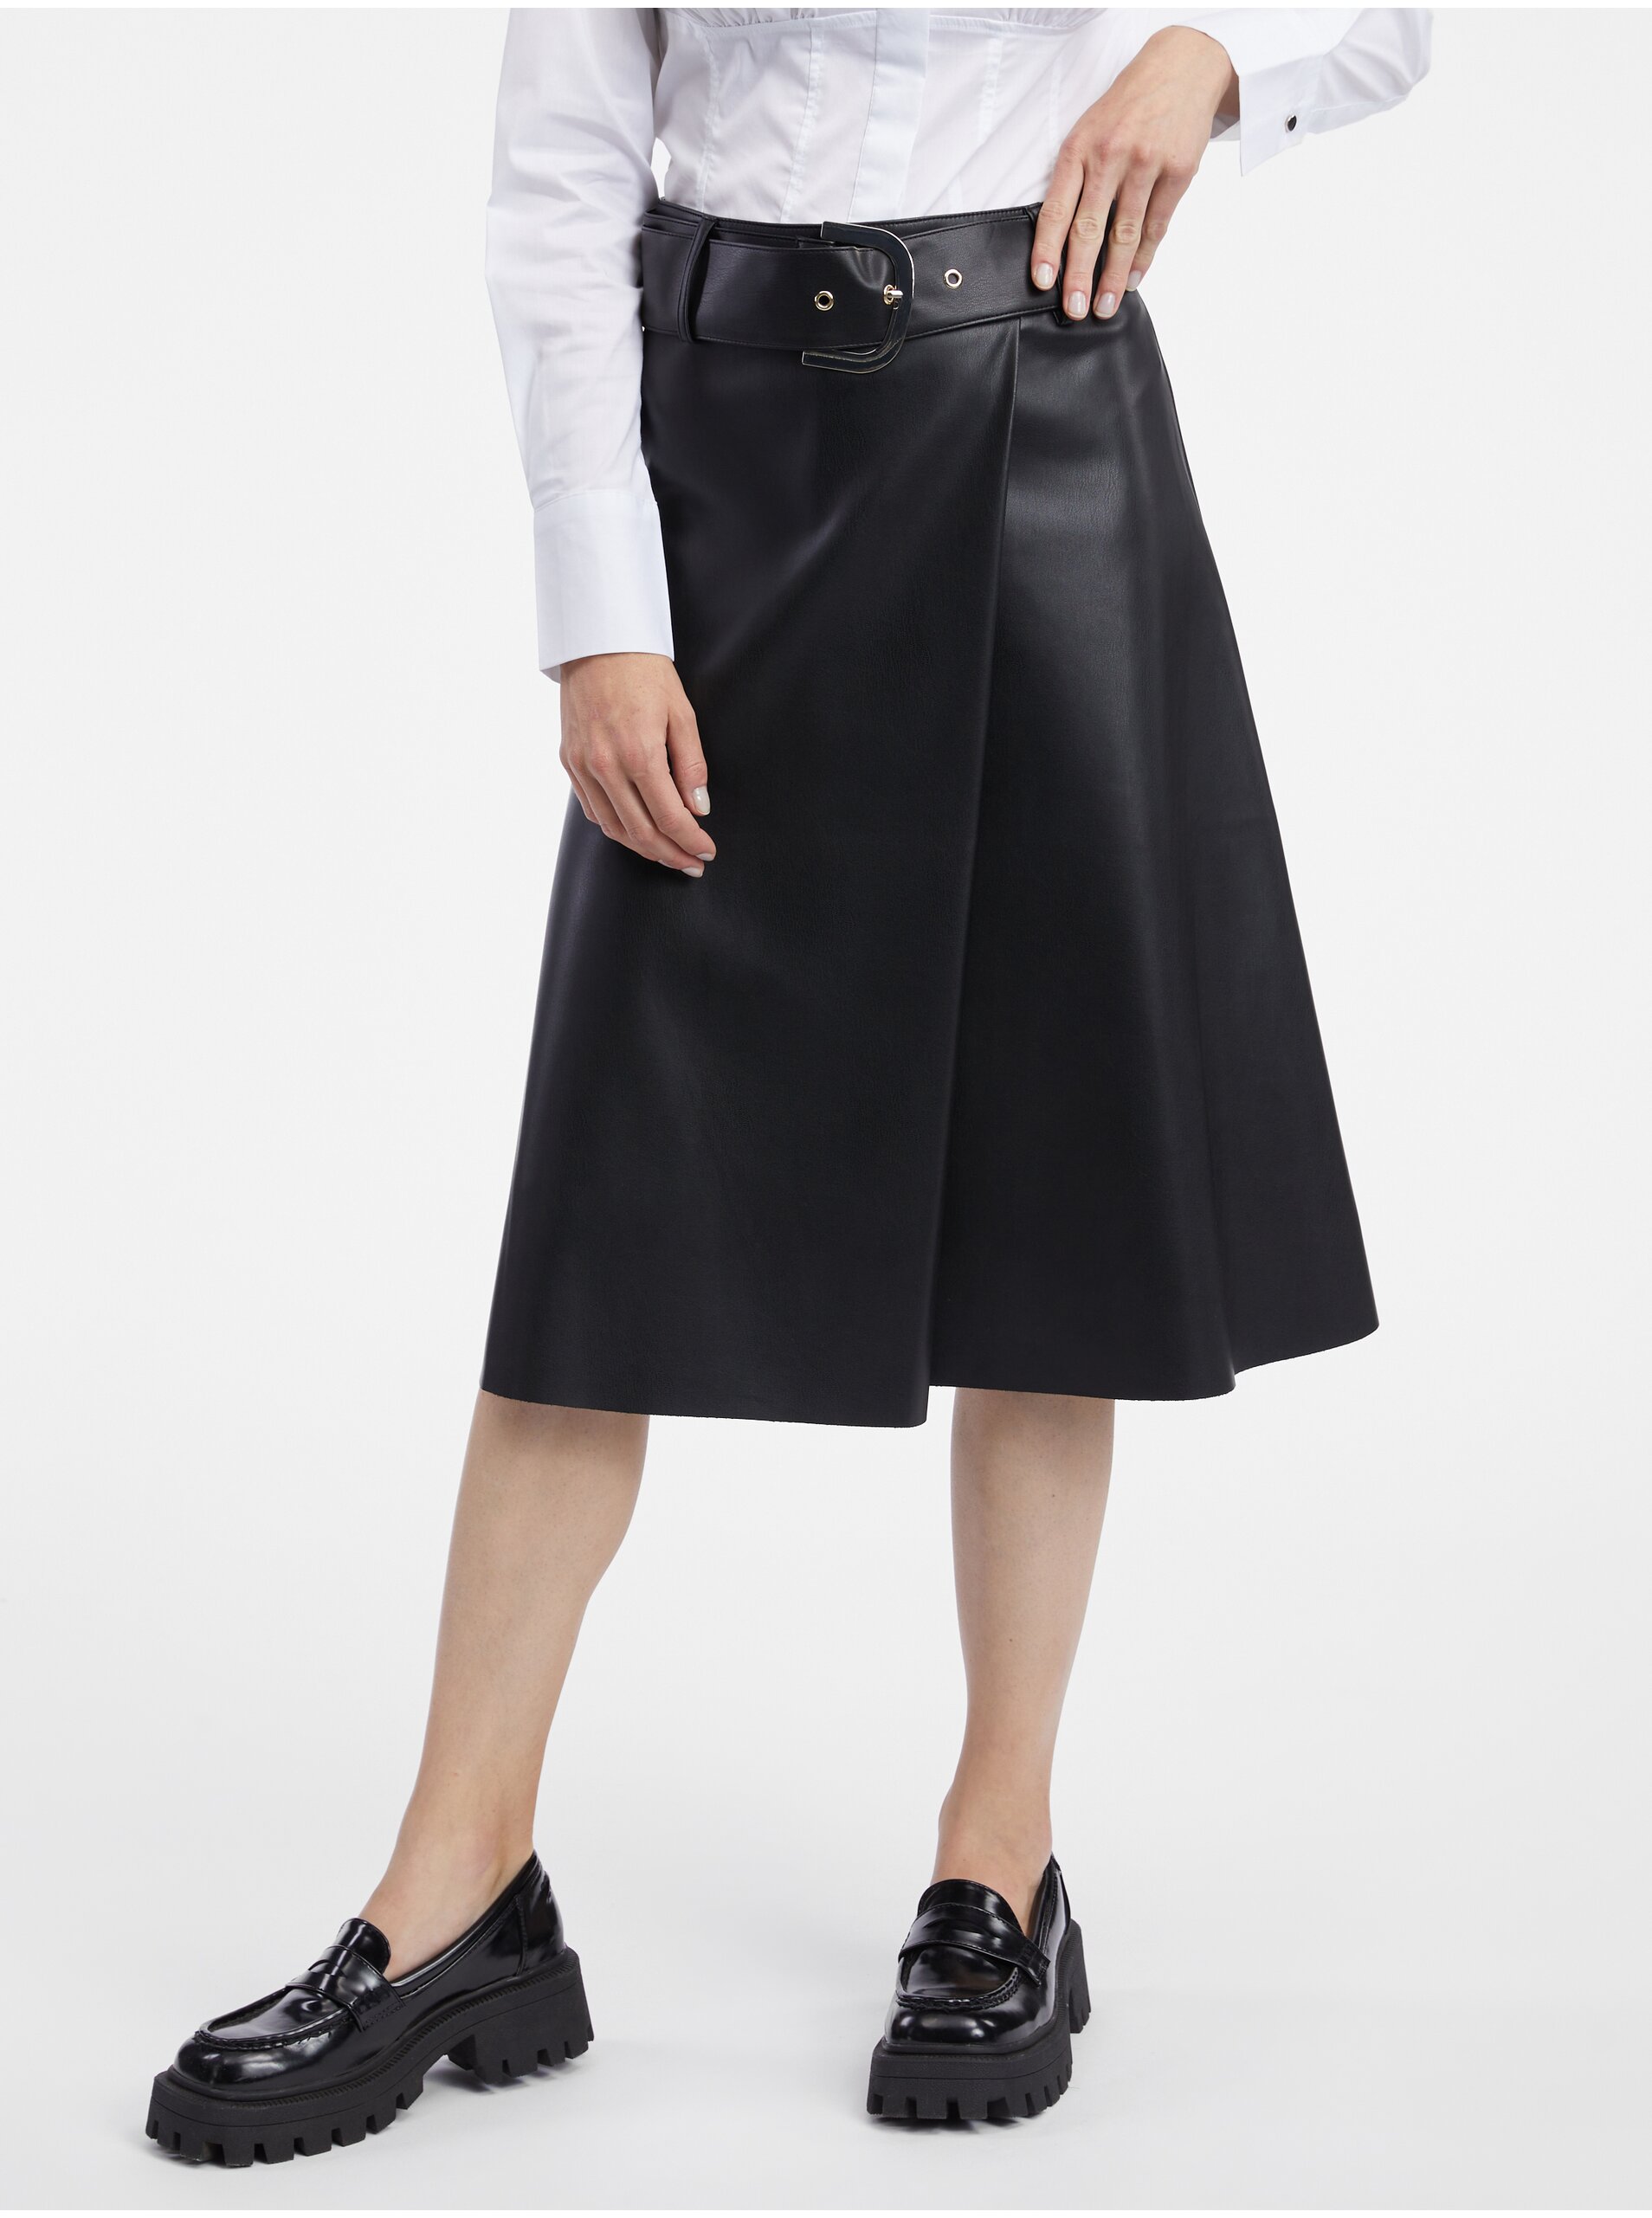 Orsay Women's Black Faux Leather Skirt - Women's